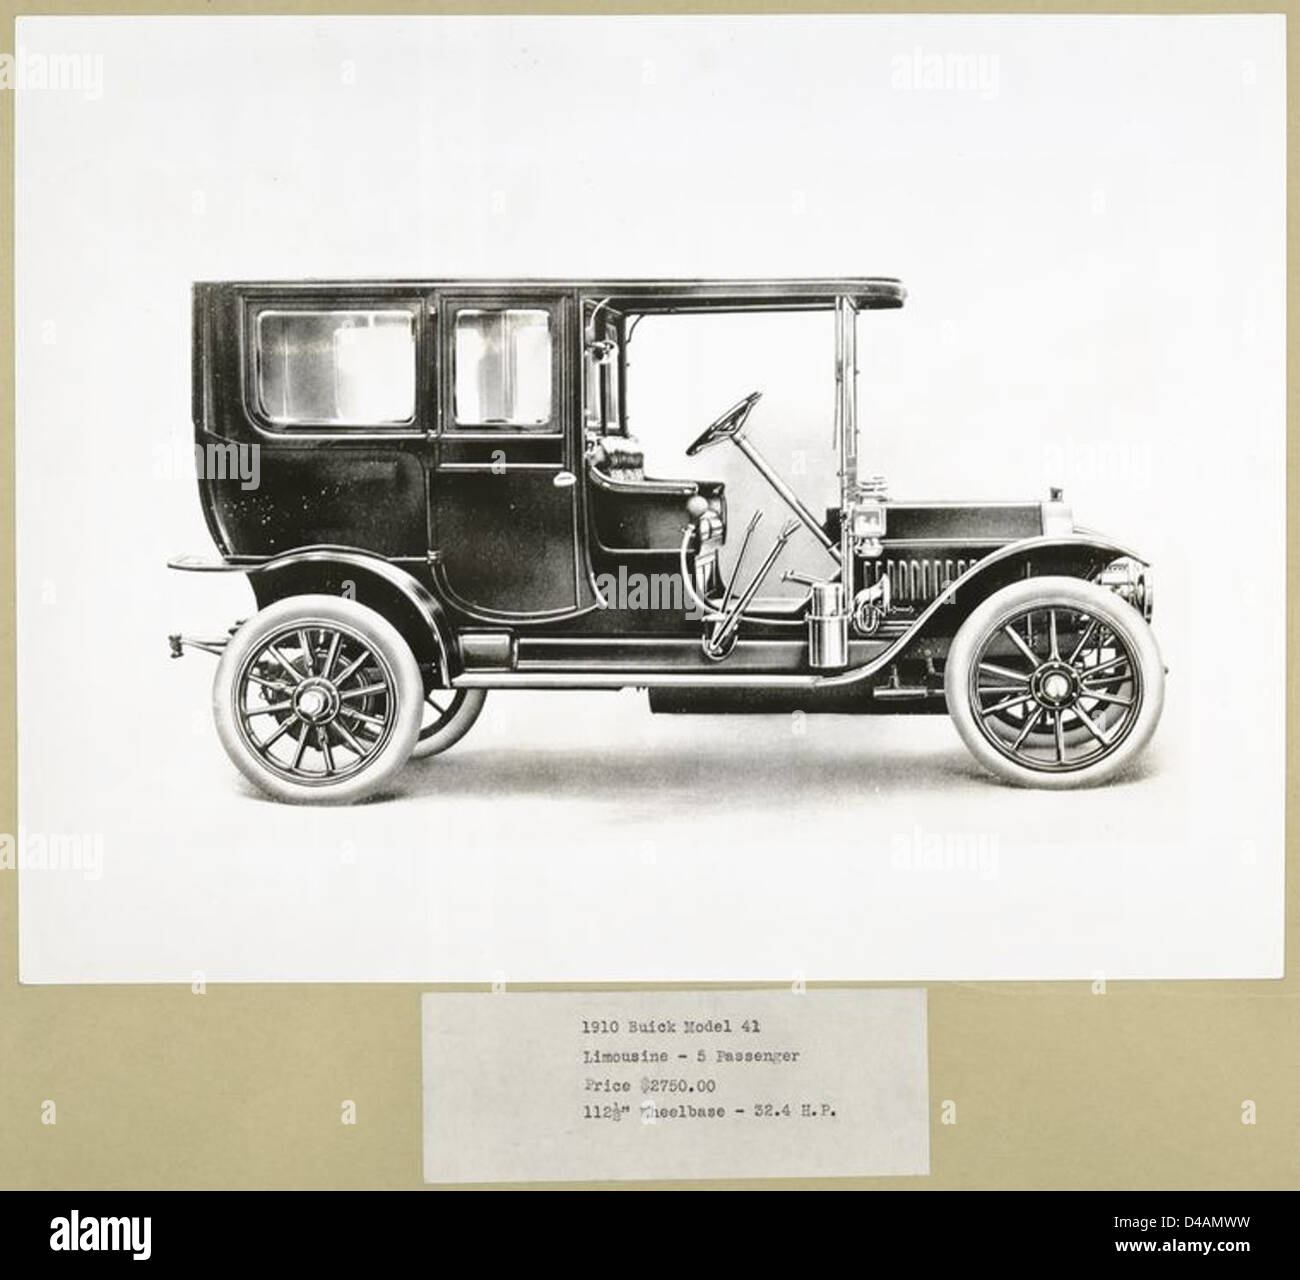 1910 Buick Model 41 - Limousine - 5 passenger. Stock Photo